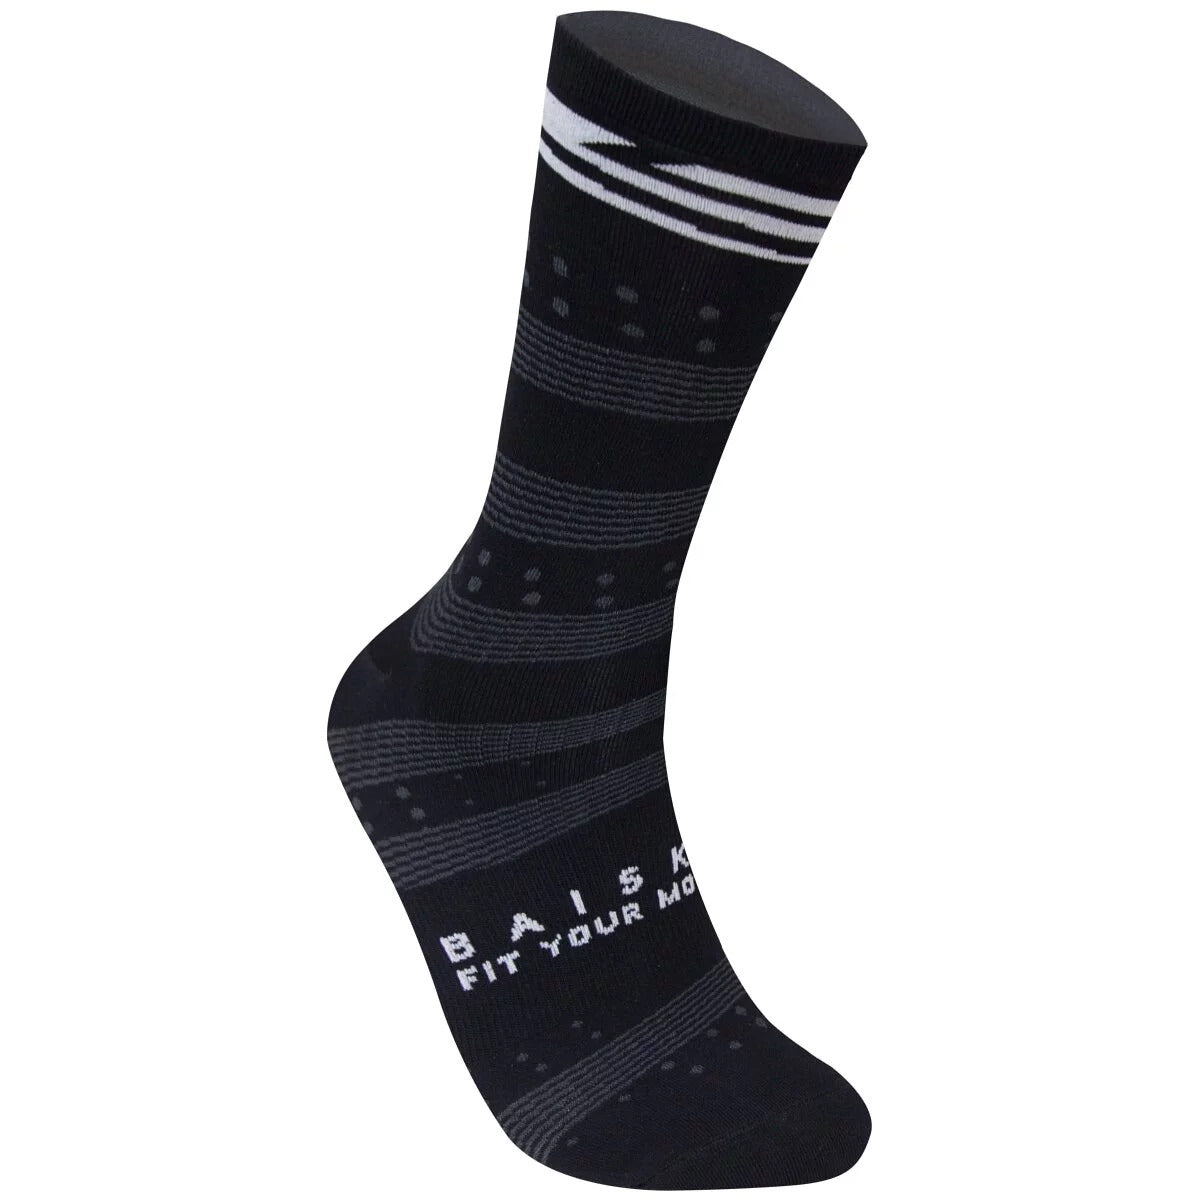 Baisky Premium Cycling Socks - TRSS129 Wind Rider Black